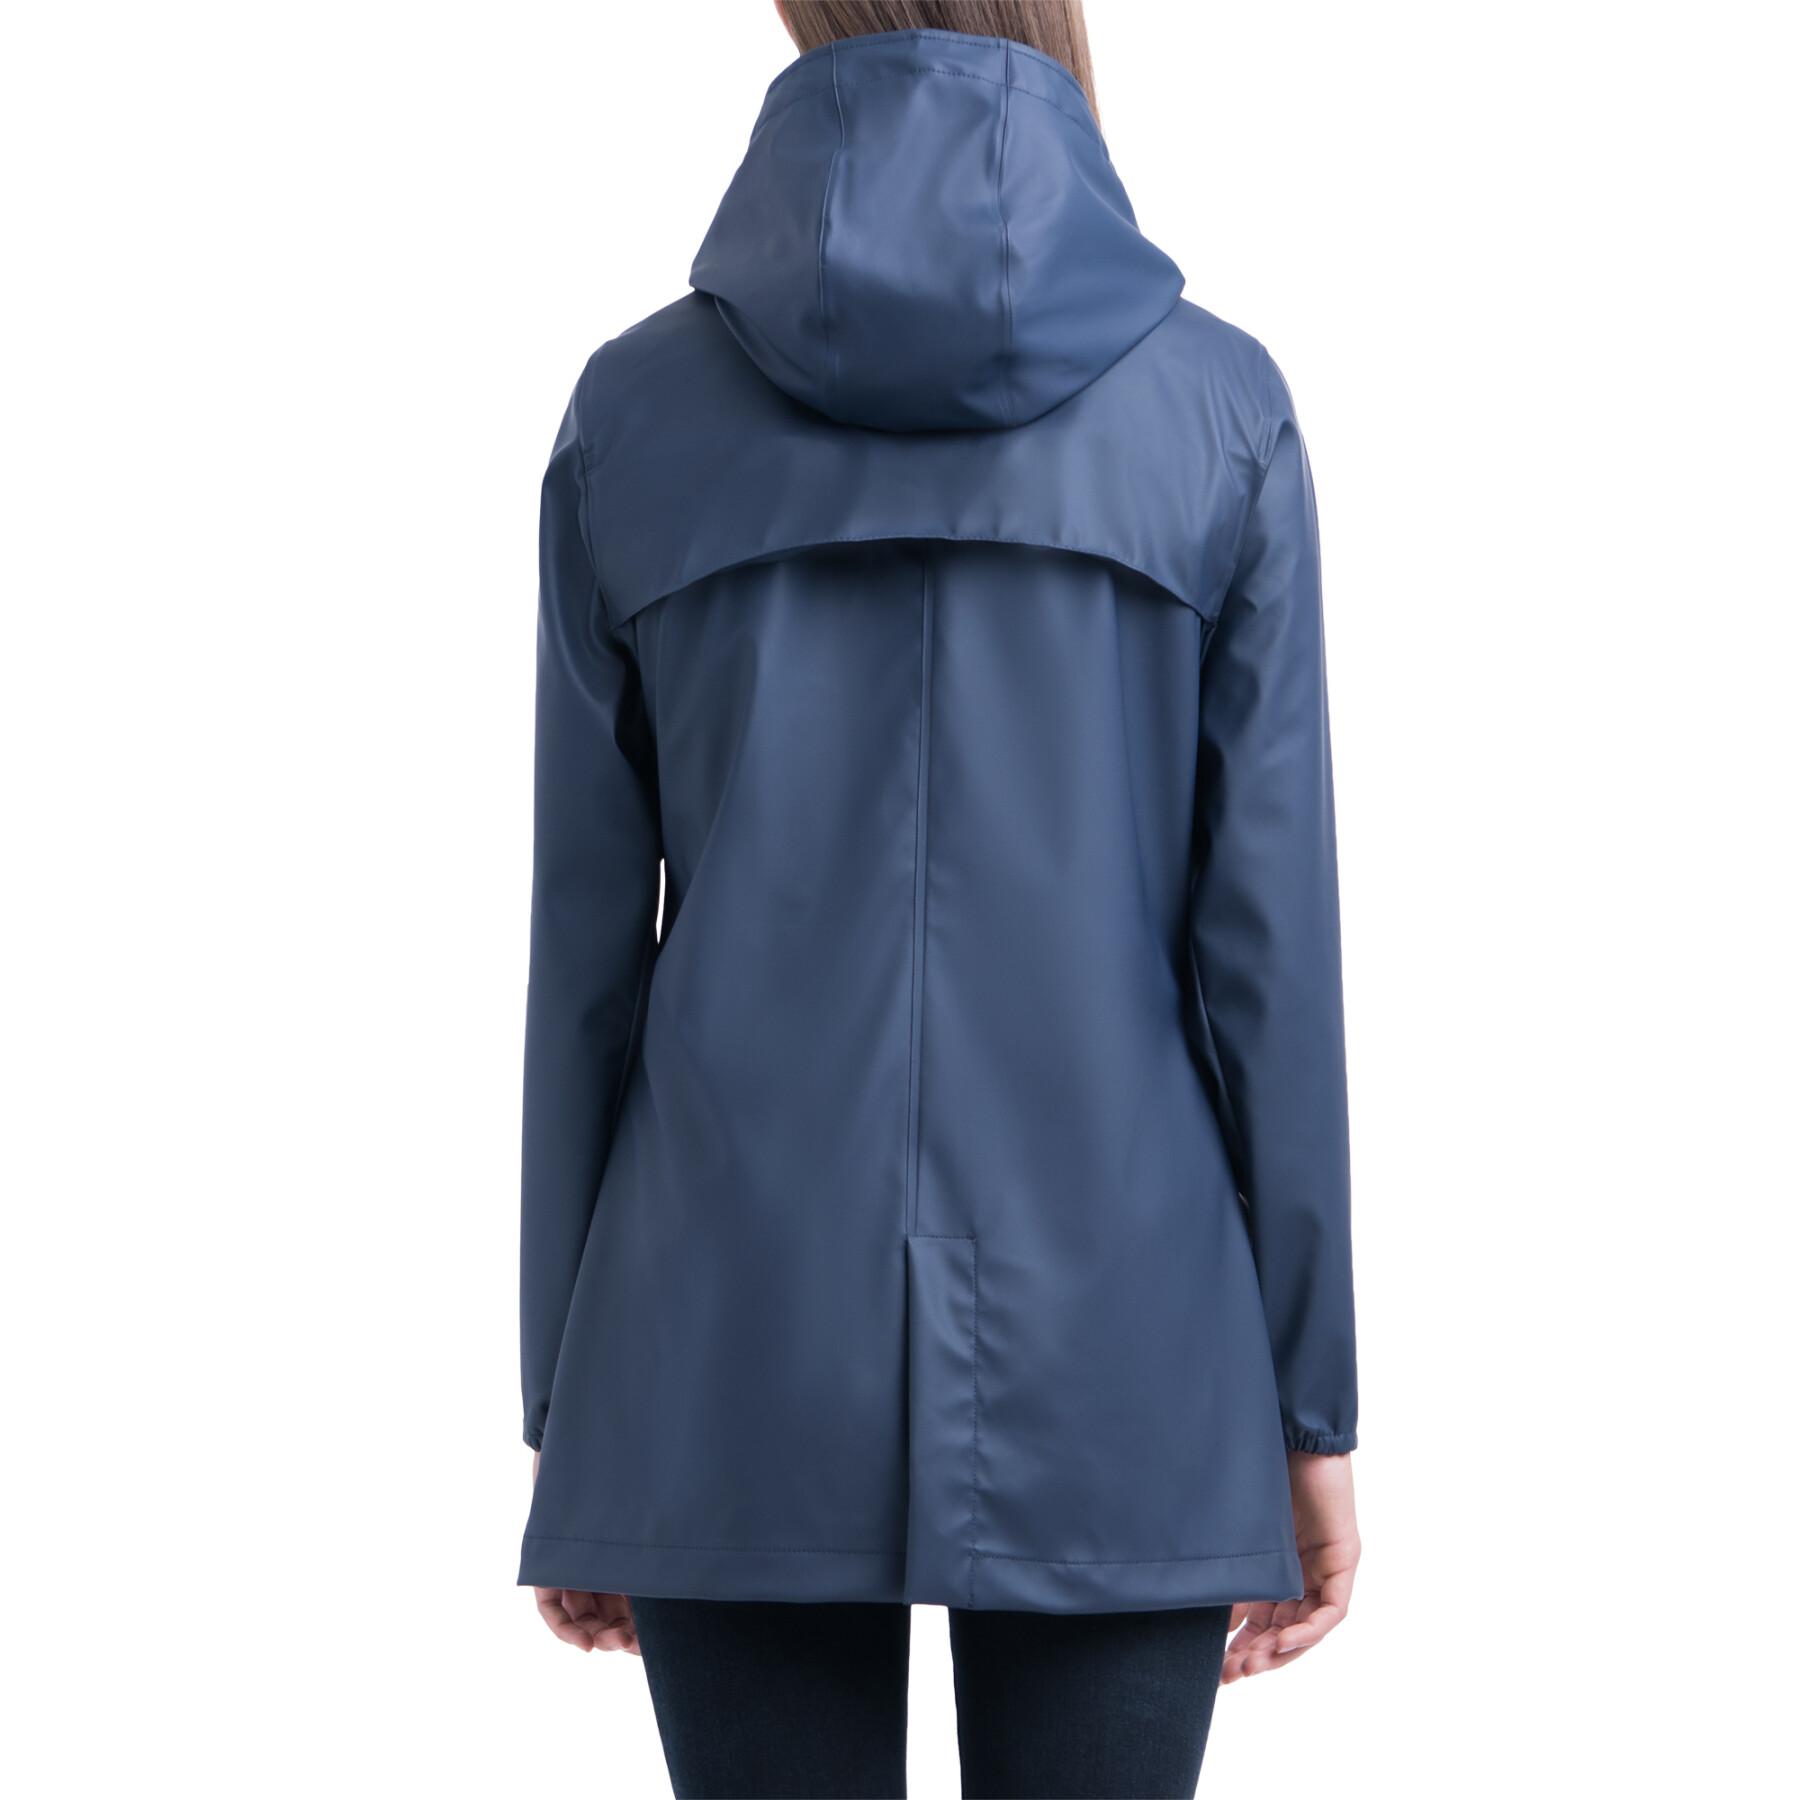 Women's jacket Herschel forecast parka peacoat